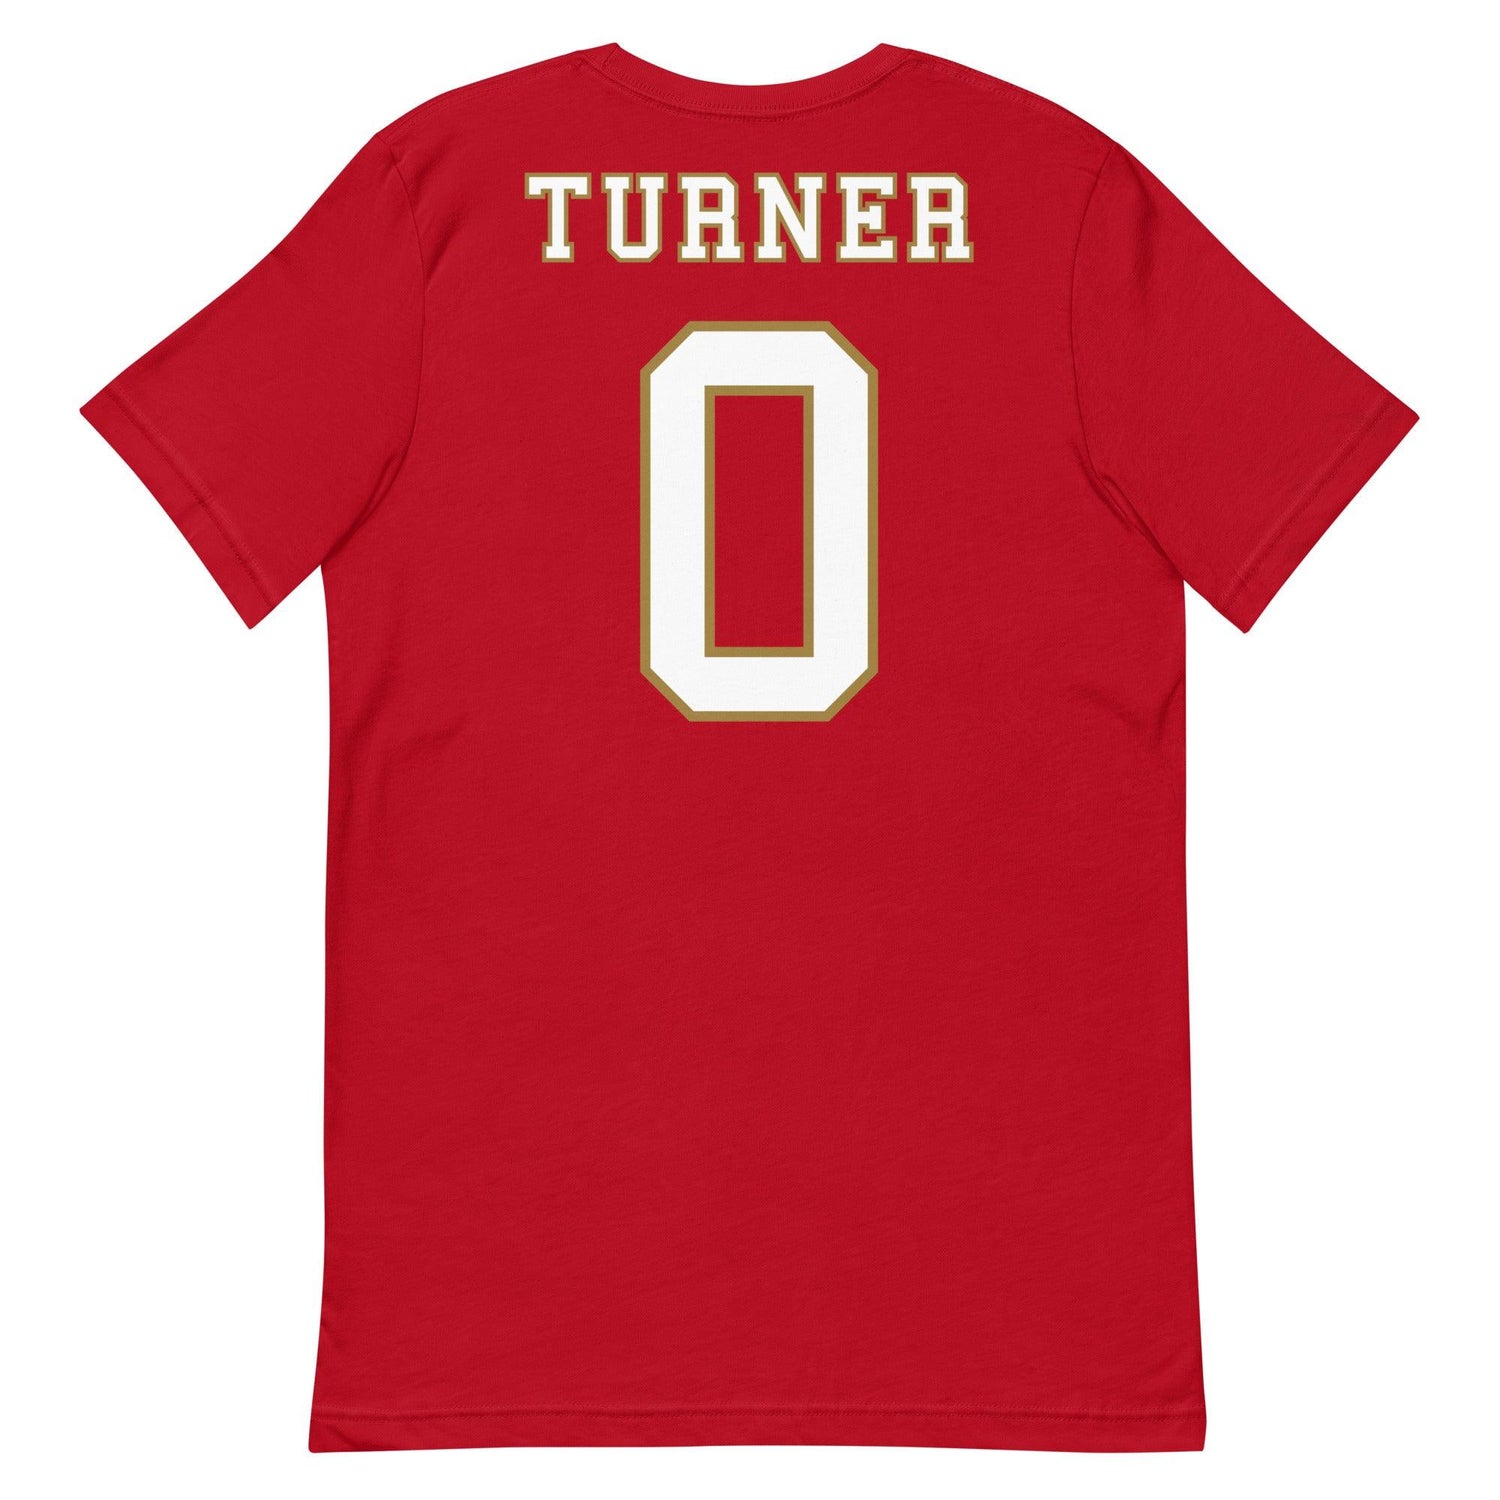 Christian Turner "Jersey" t-shirt - Fan Arch